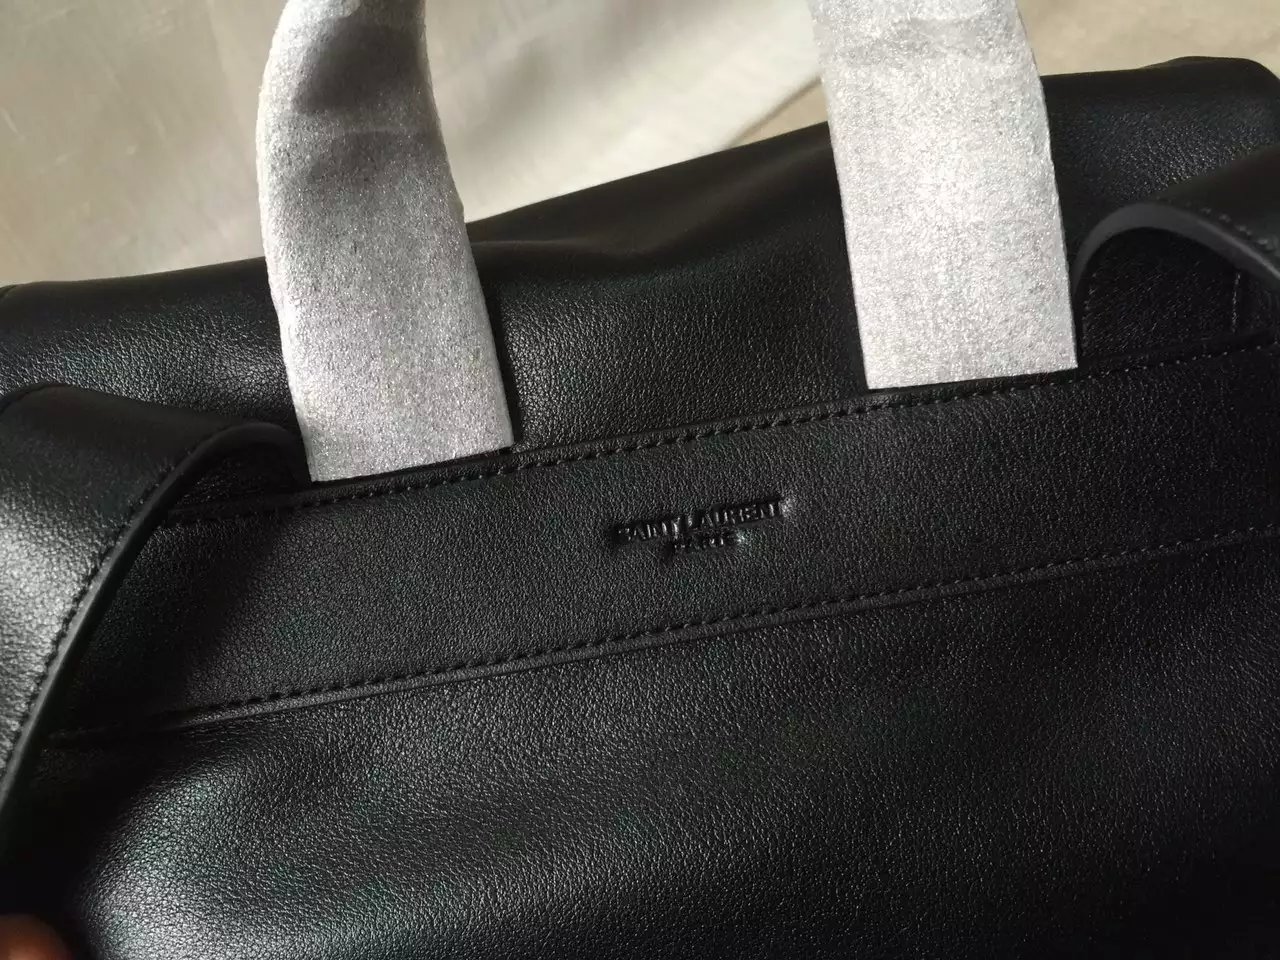 2016 Saint Laurent Bags Cheap Sale-Saint Laurent Festival Fringed Backpack in Black Leather - Click Image to Close